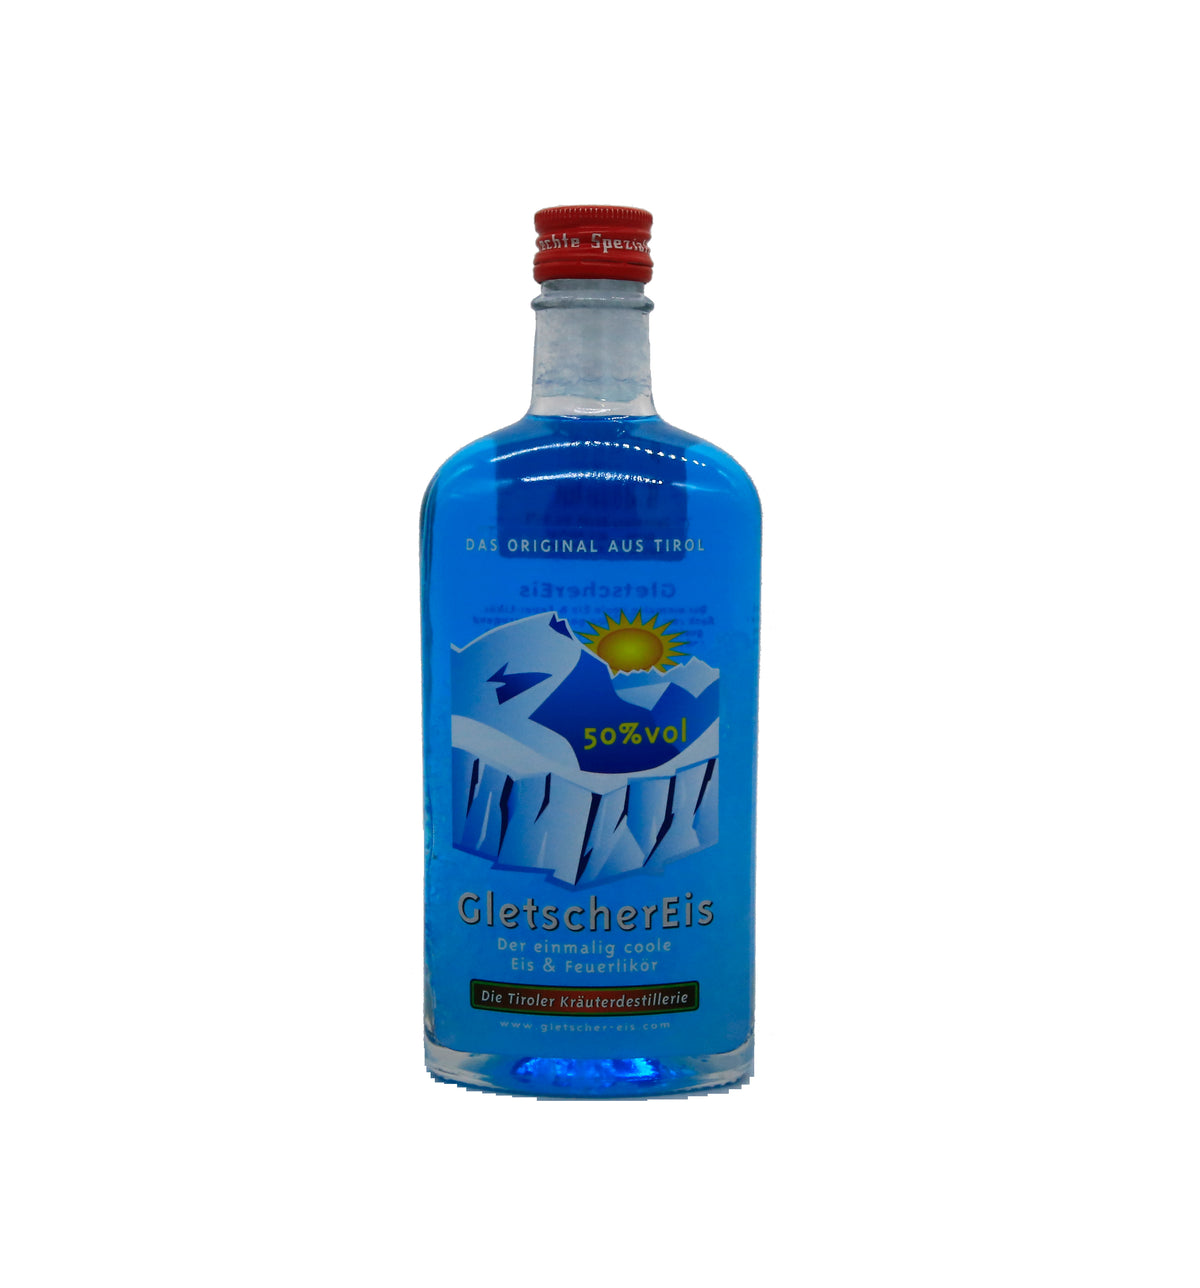 Specialties ( ) GletscherEis — Glacier German Ice 500ml Baumann Liquor Germanliquor.com.au |